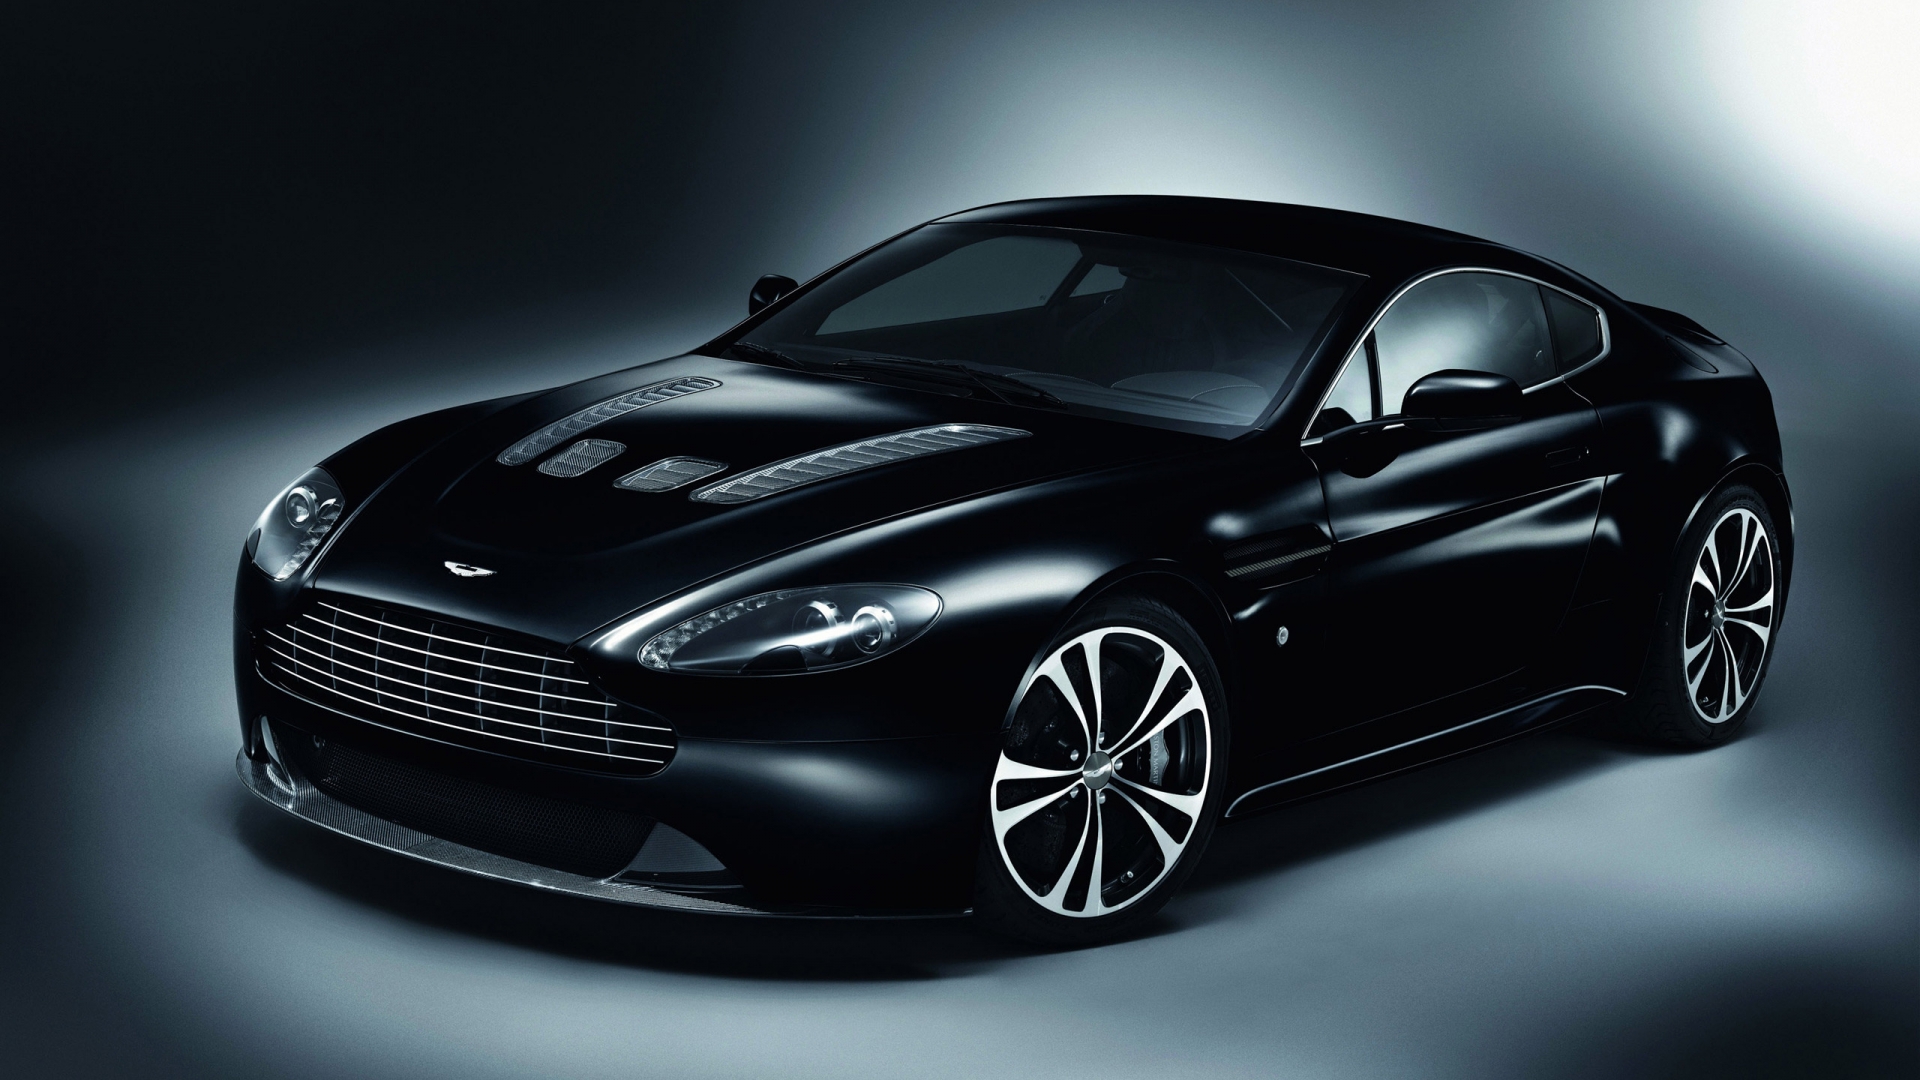 Aston Martin V12 Vantage Carbon Black for 1920 x 1080 HDTV 1080p resolution